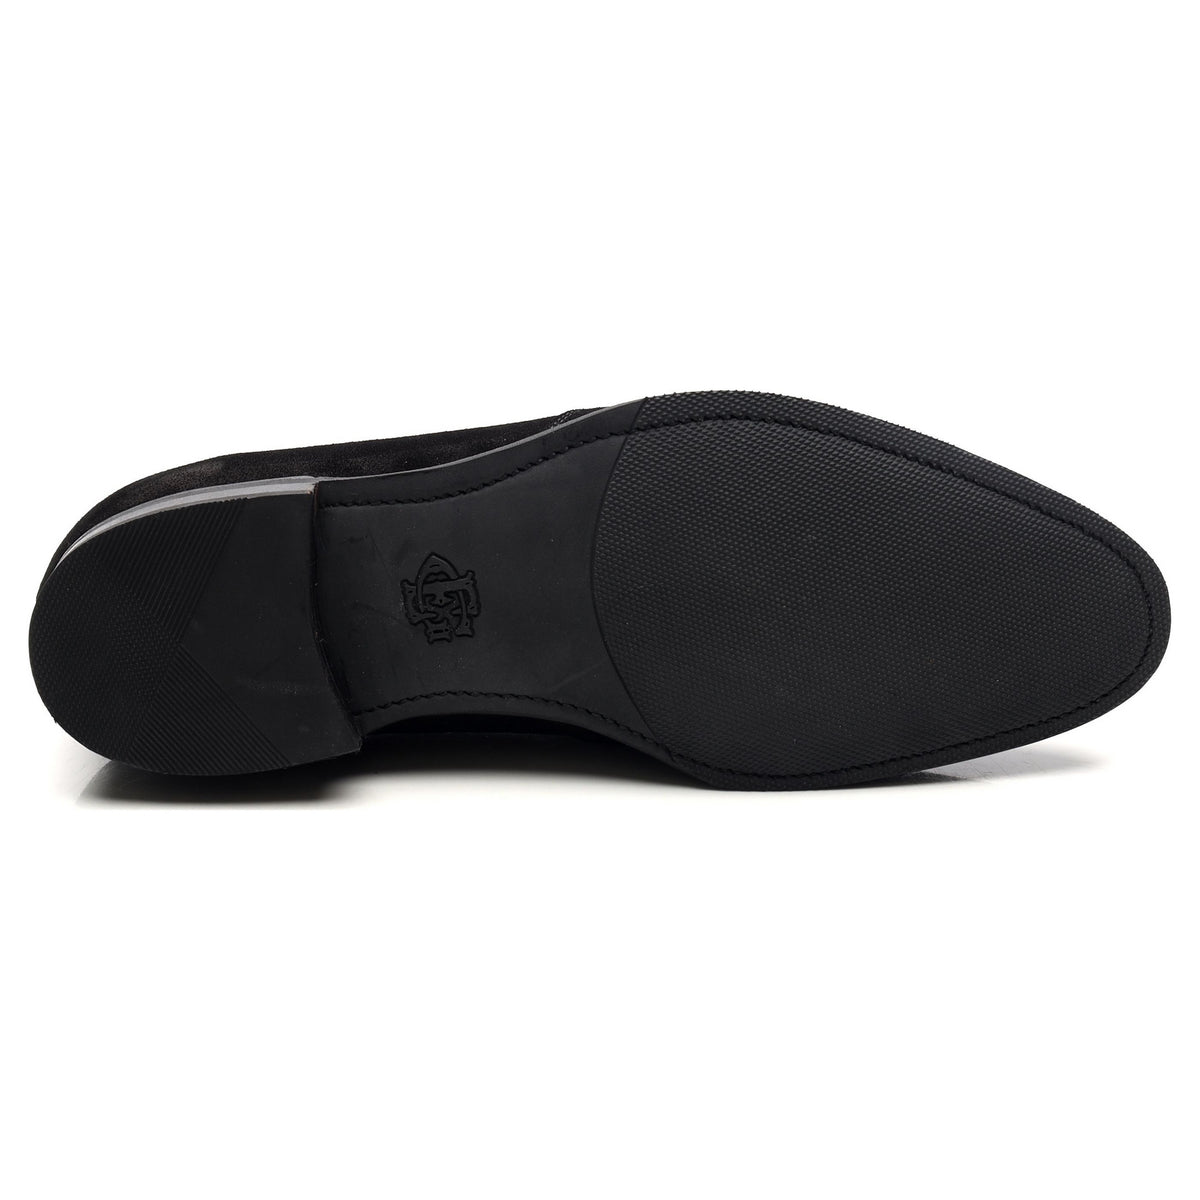 Black Suede Slip On Loafers UK 6.5 E